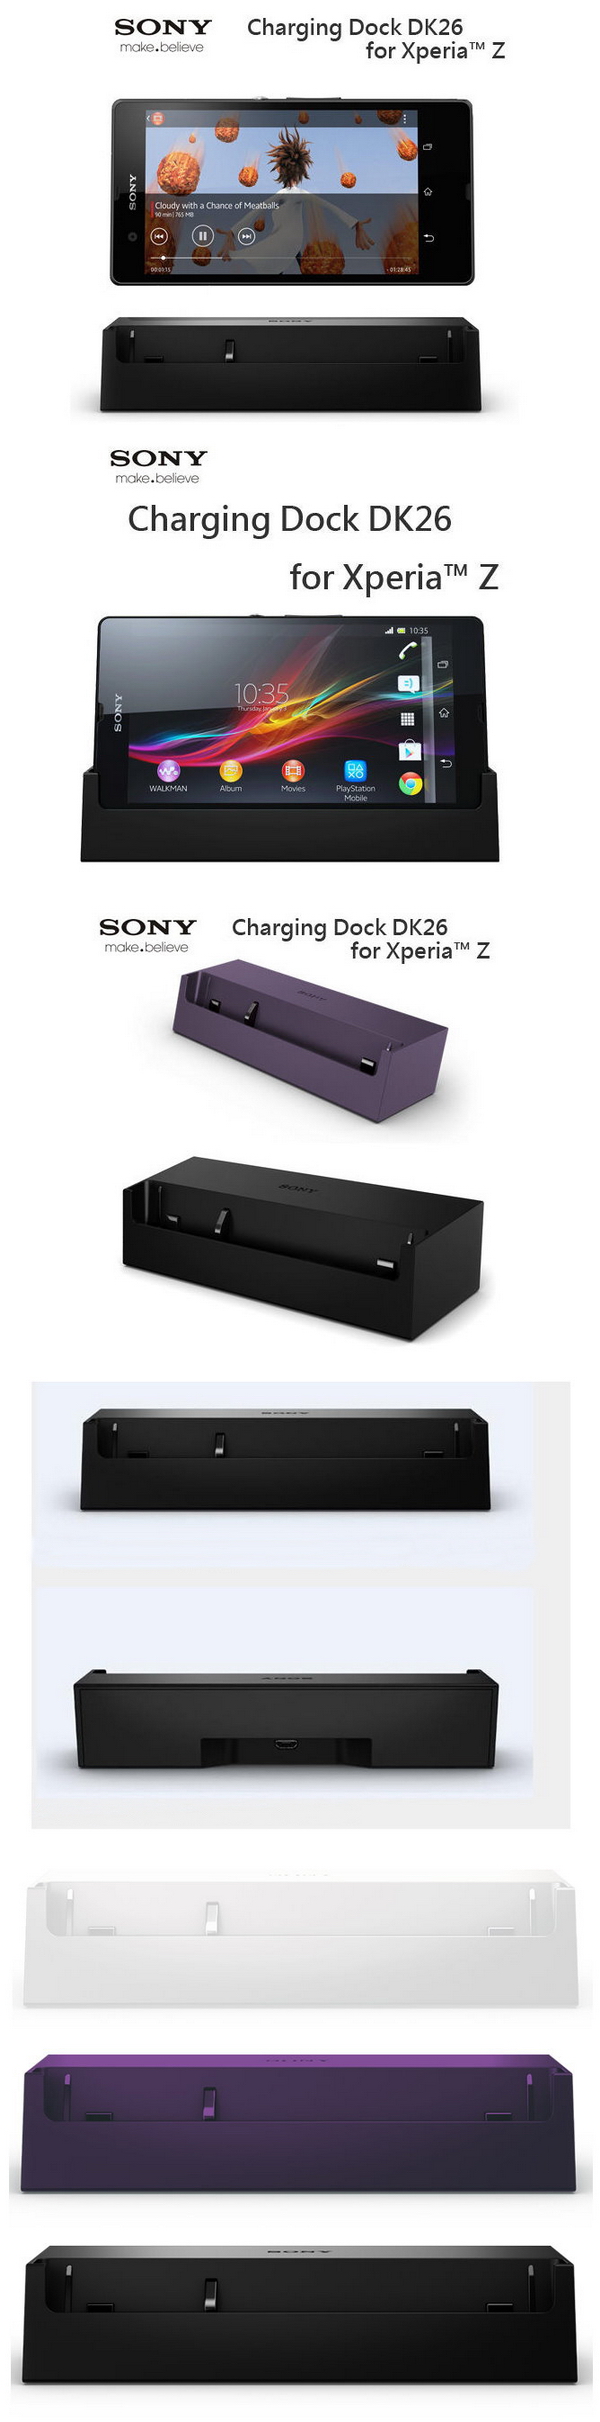 Sony DK26 Original Genuine Charging Dock For Xperia Z C6602 C6603 C6606